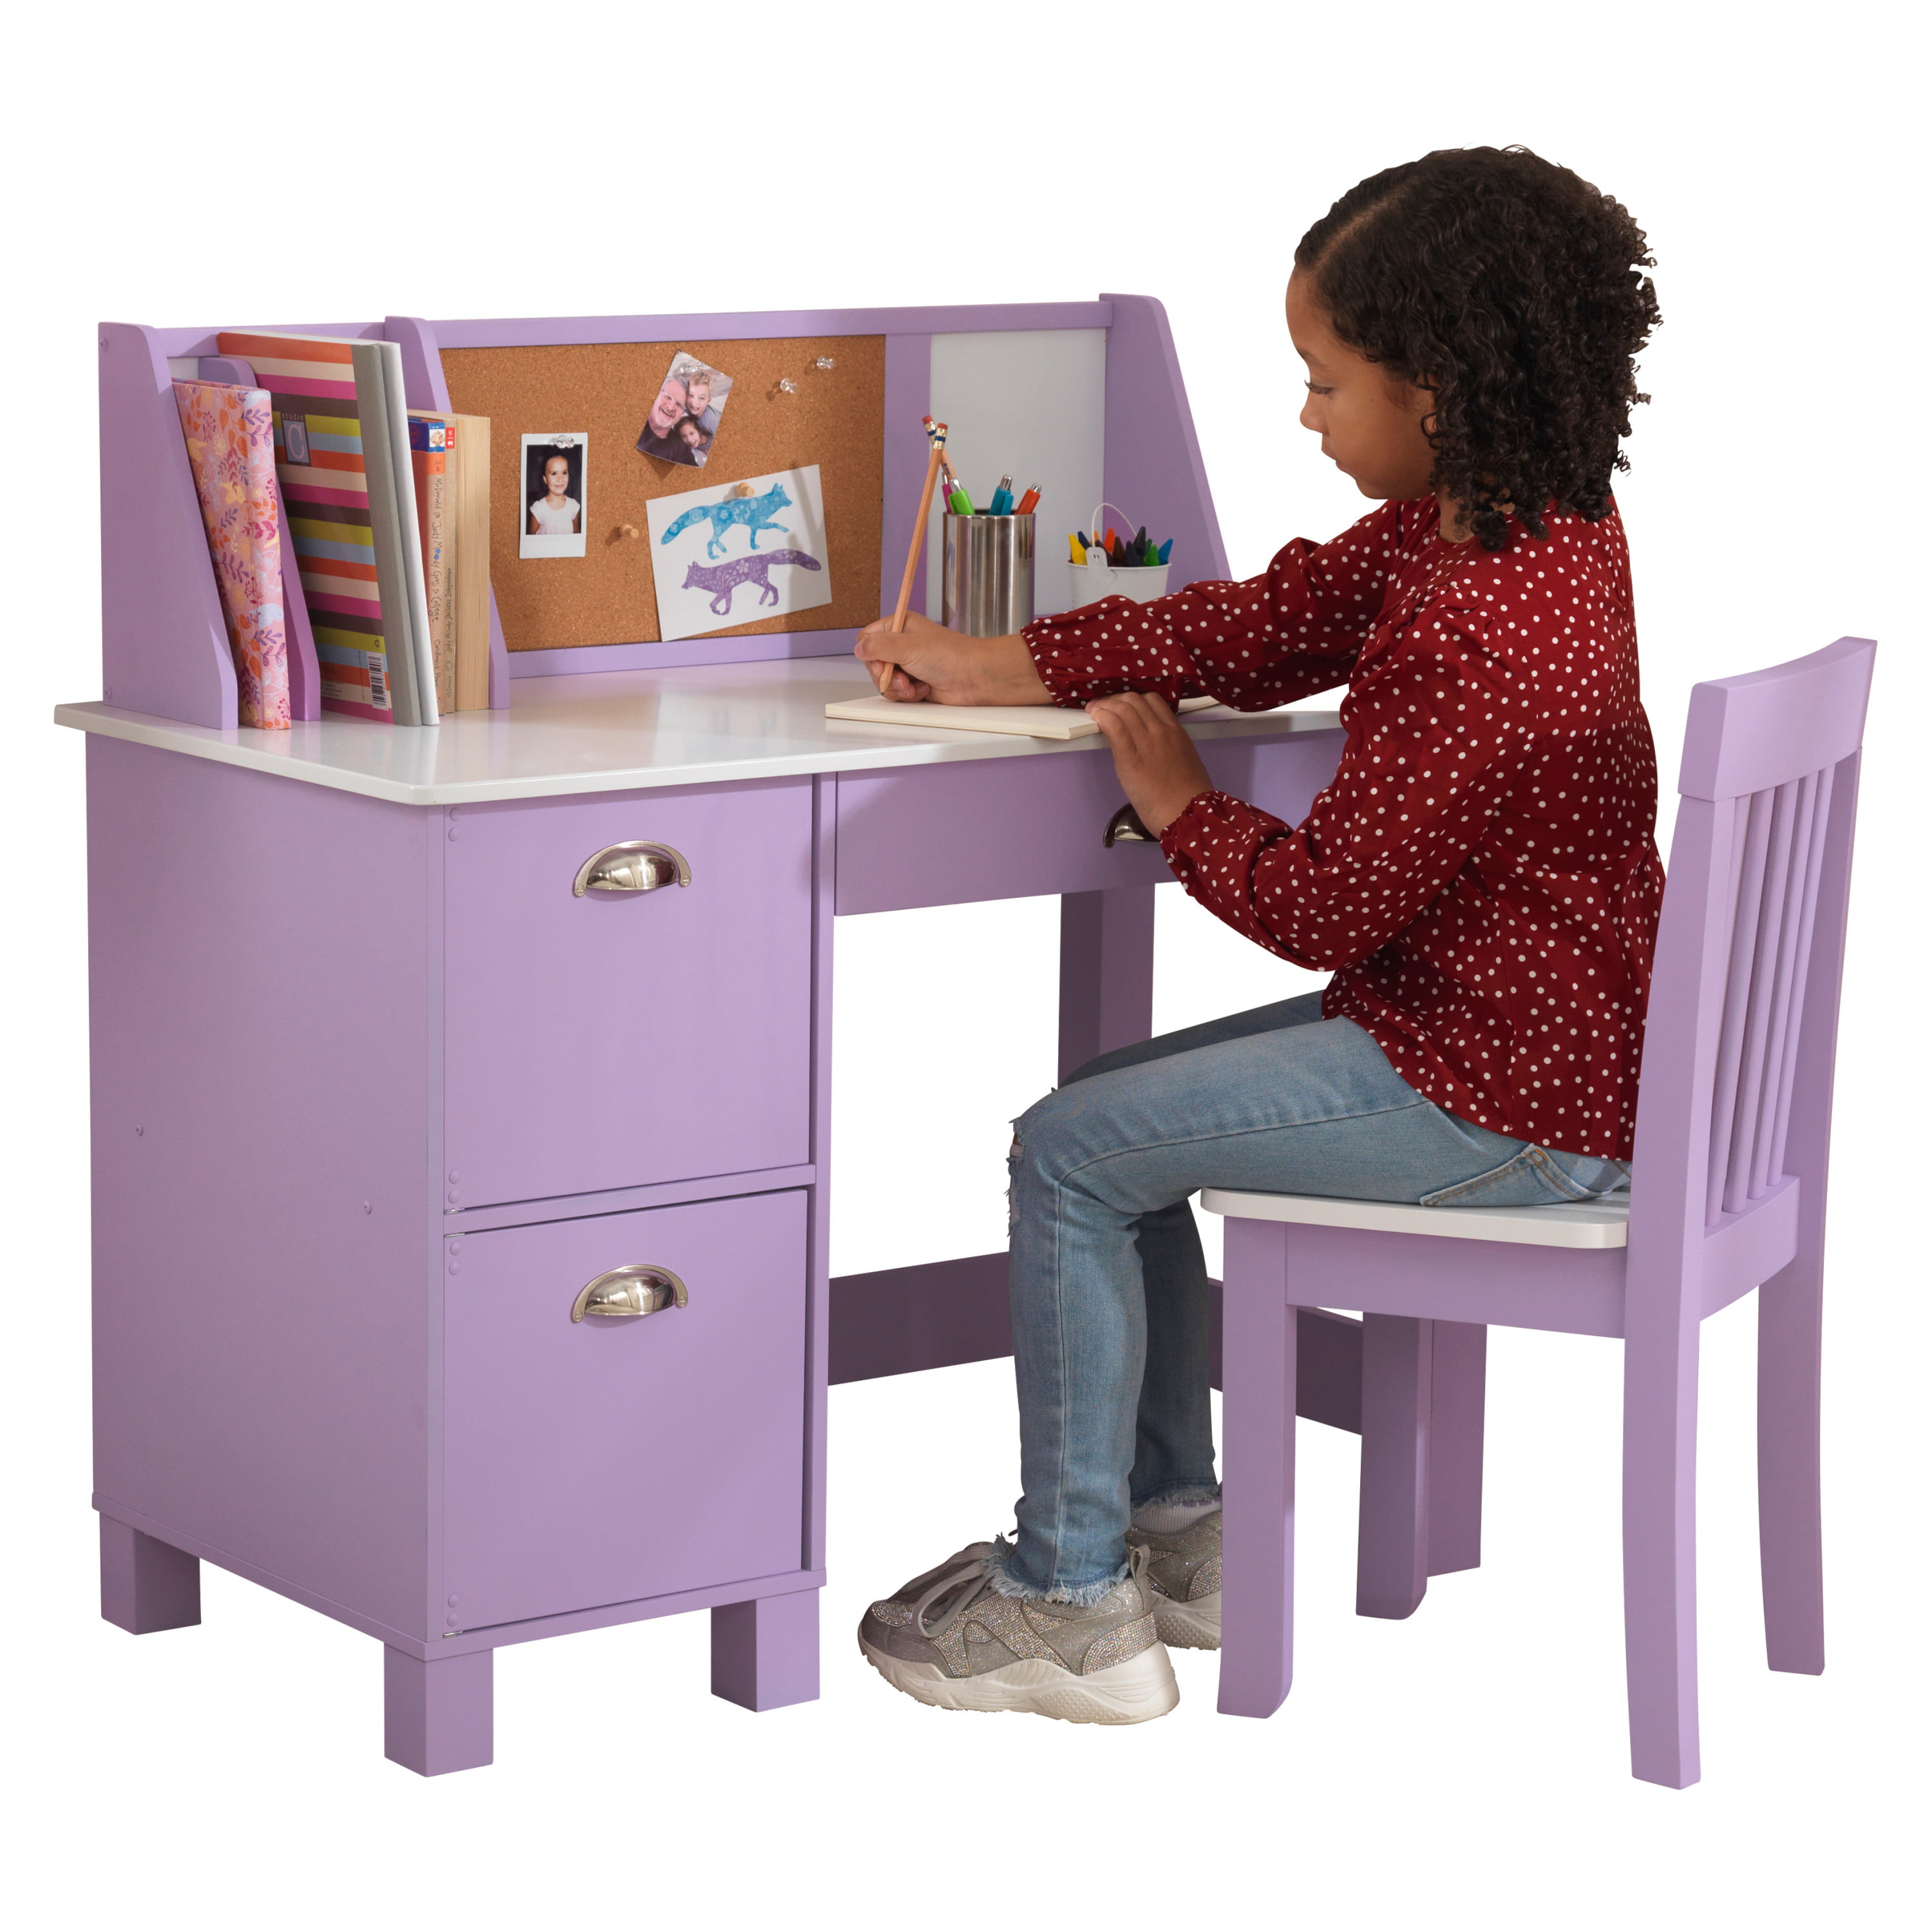 KidKraft Study Desk with Chair - Lavender - Walmart.com - Walmart.com